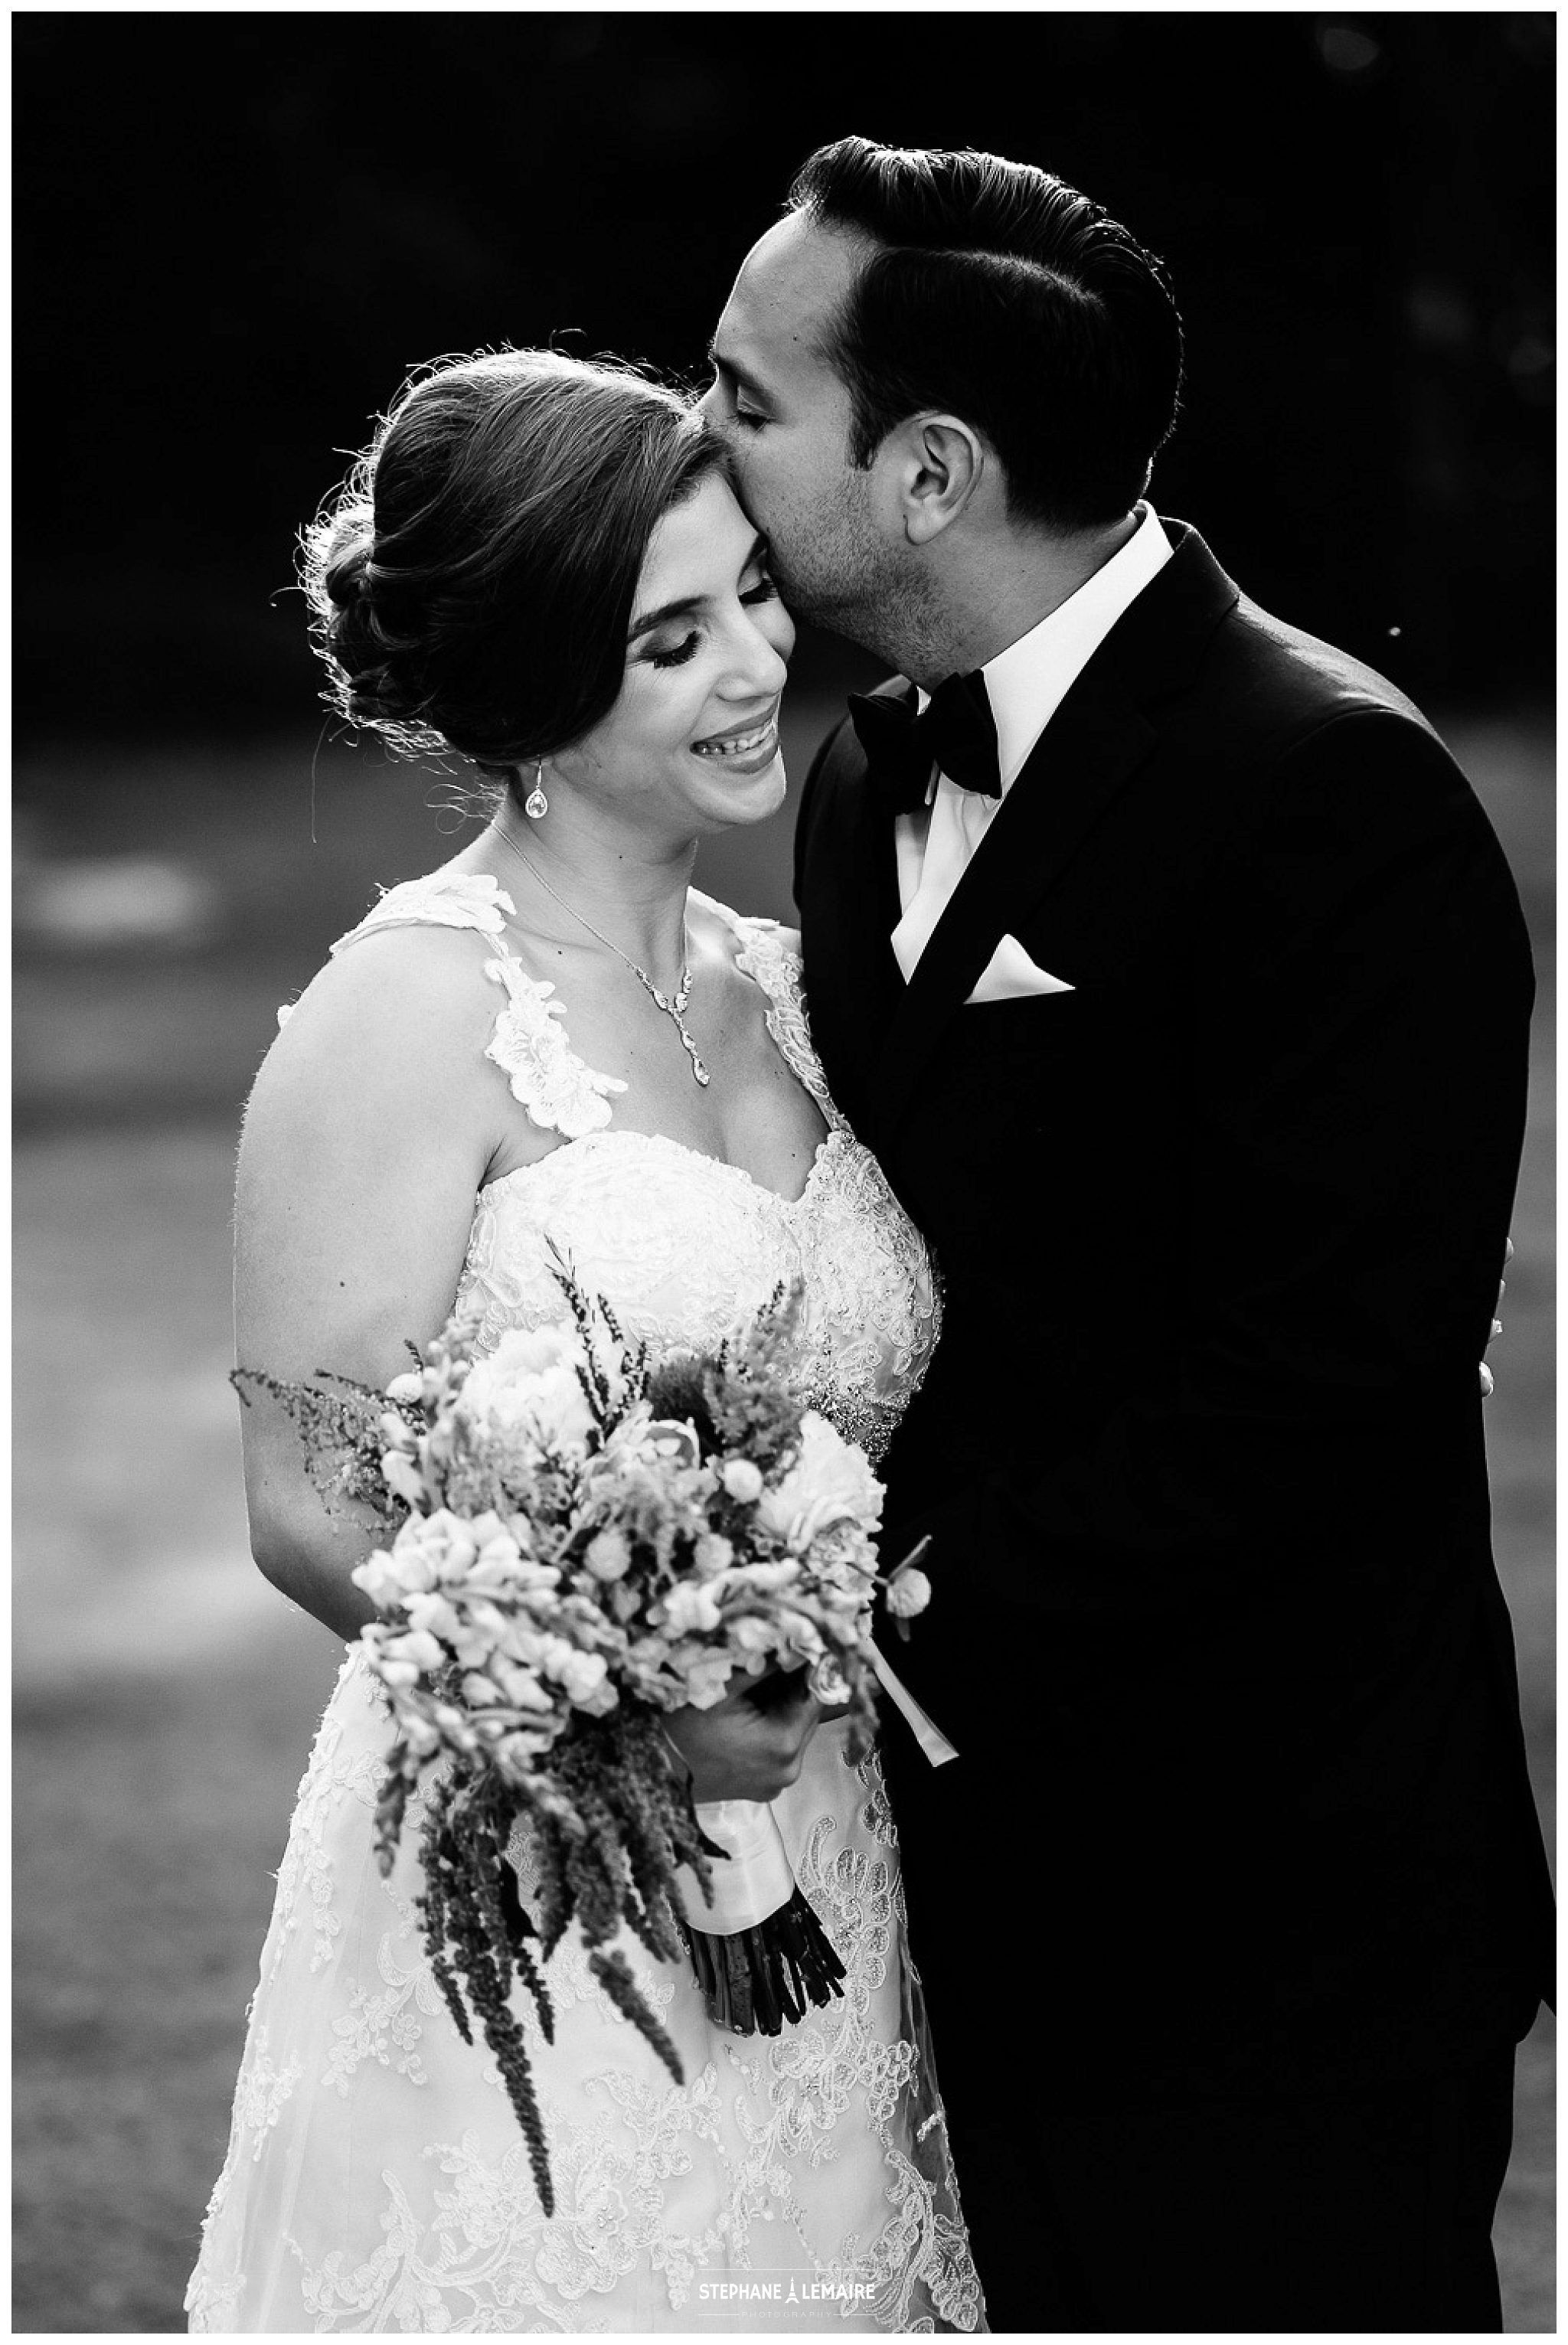 Black and white portrait of Groom kissing Bride's cheek